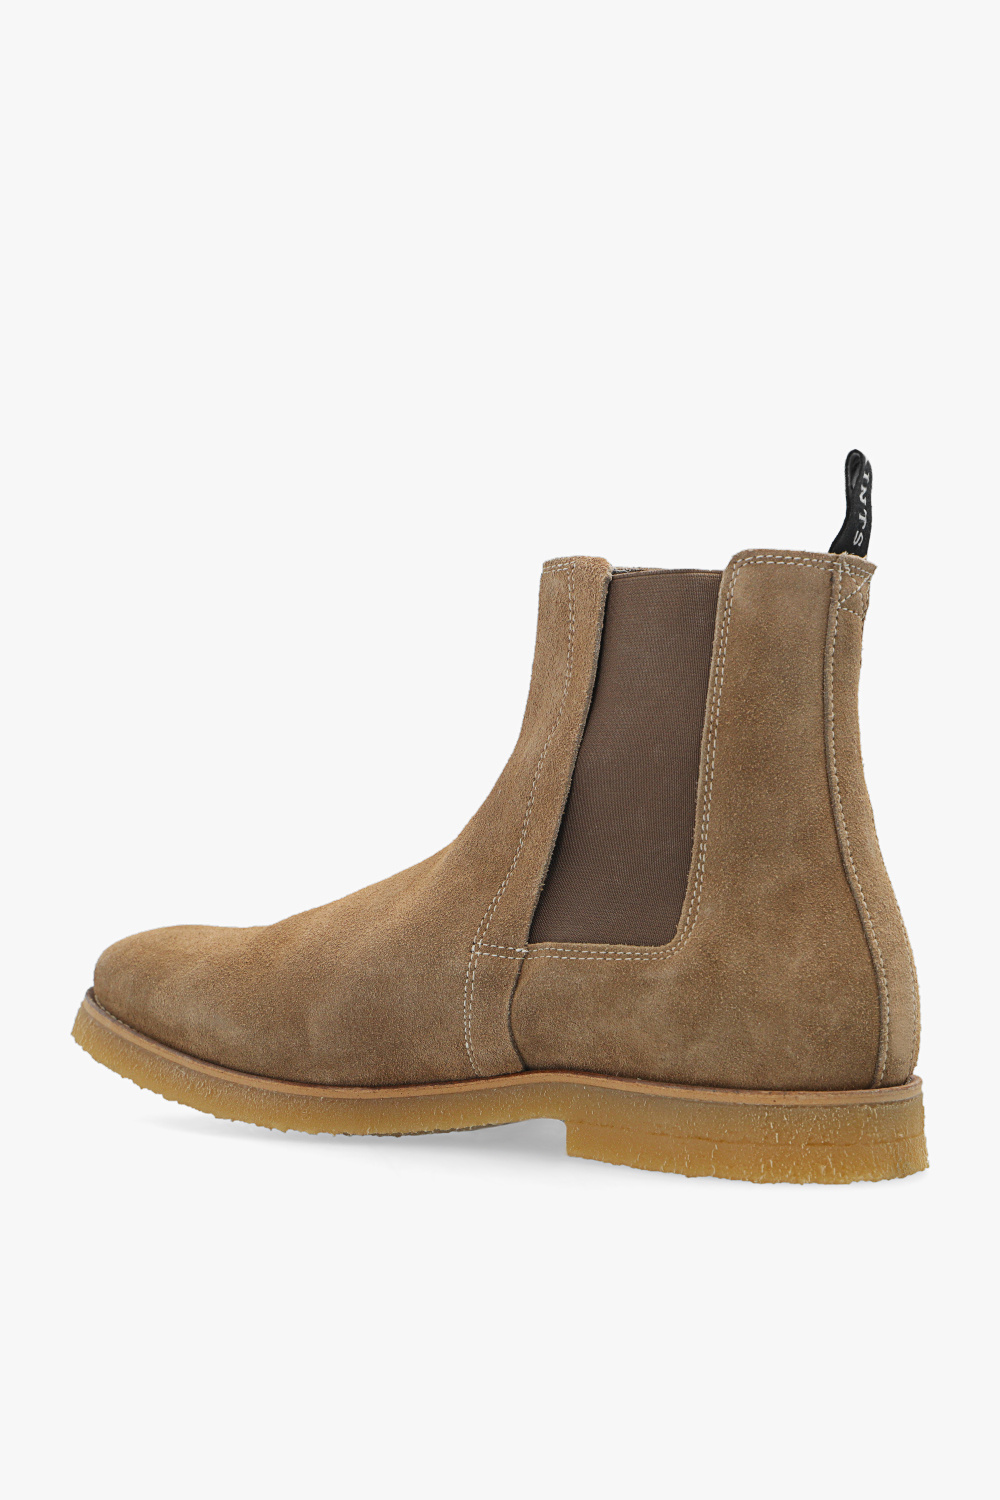 AllSaints ‘Rhett’ Chelsea boots